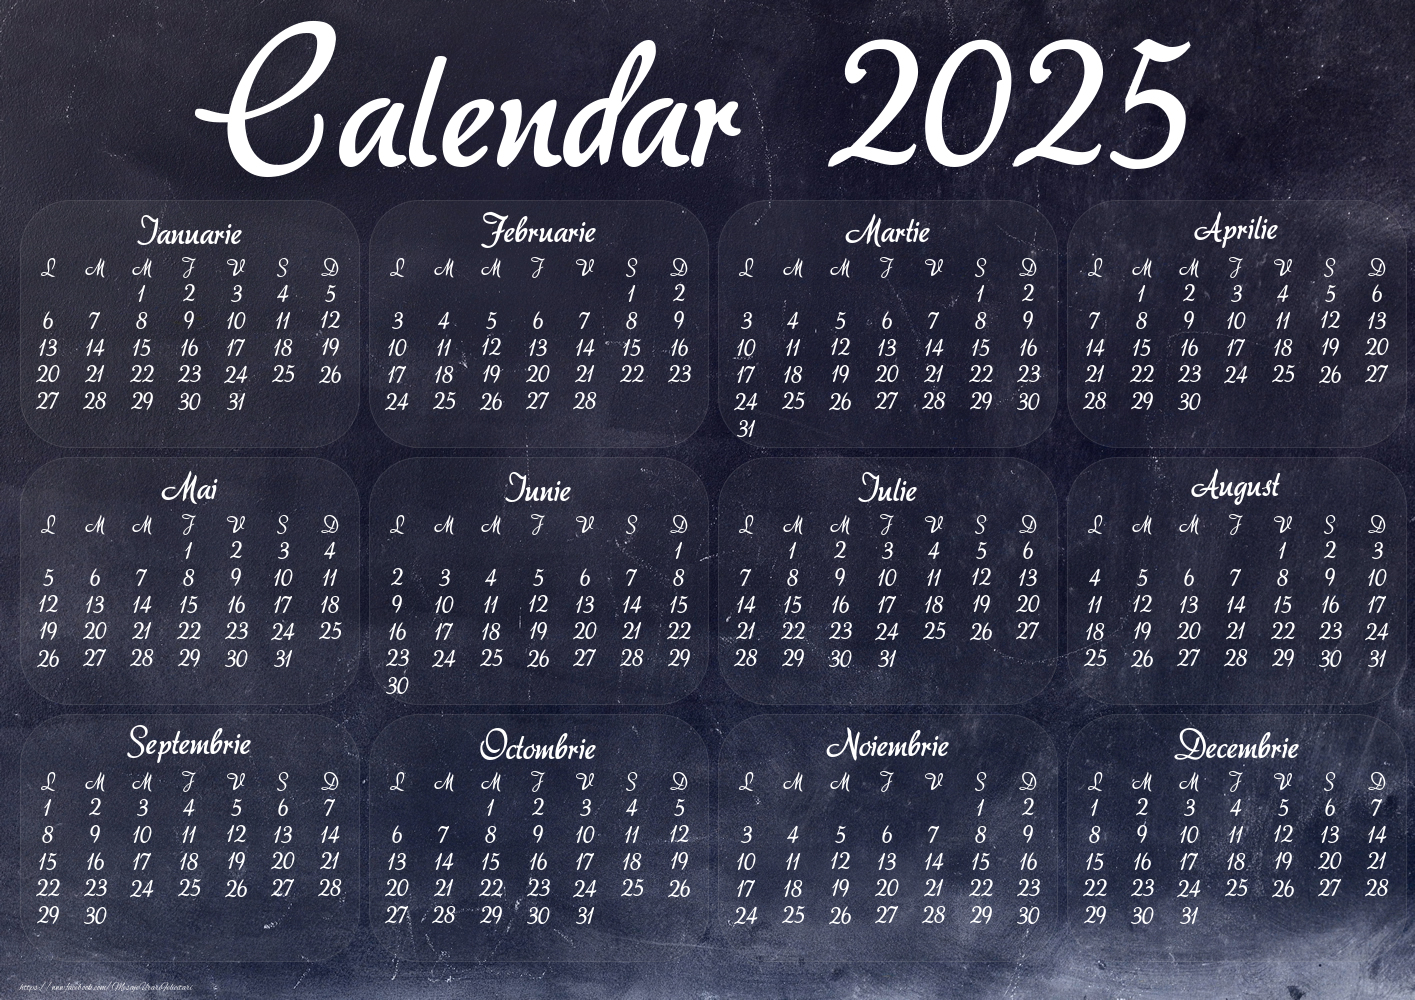 Calendare Calendar 2025 - Black - Model 0034